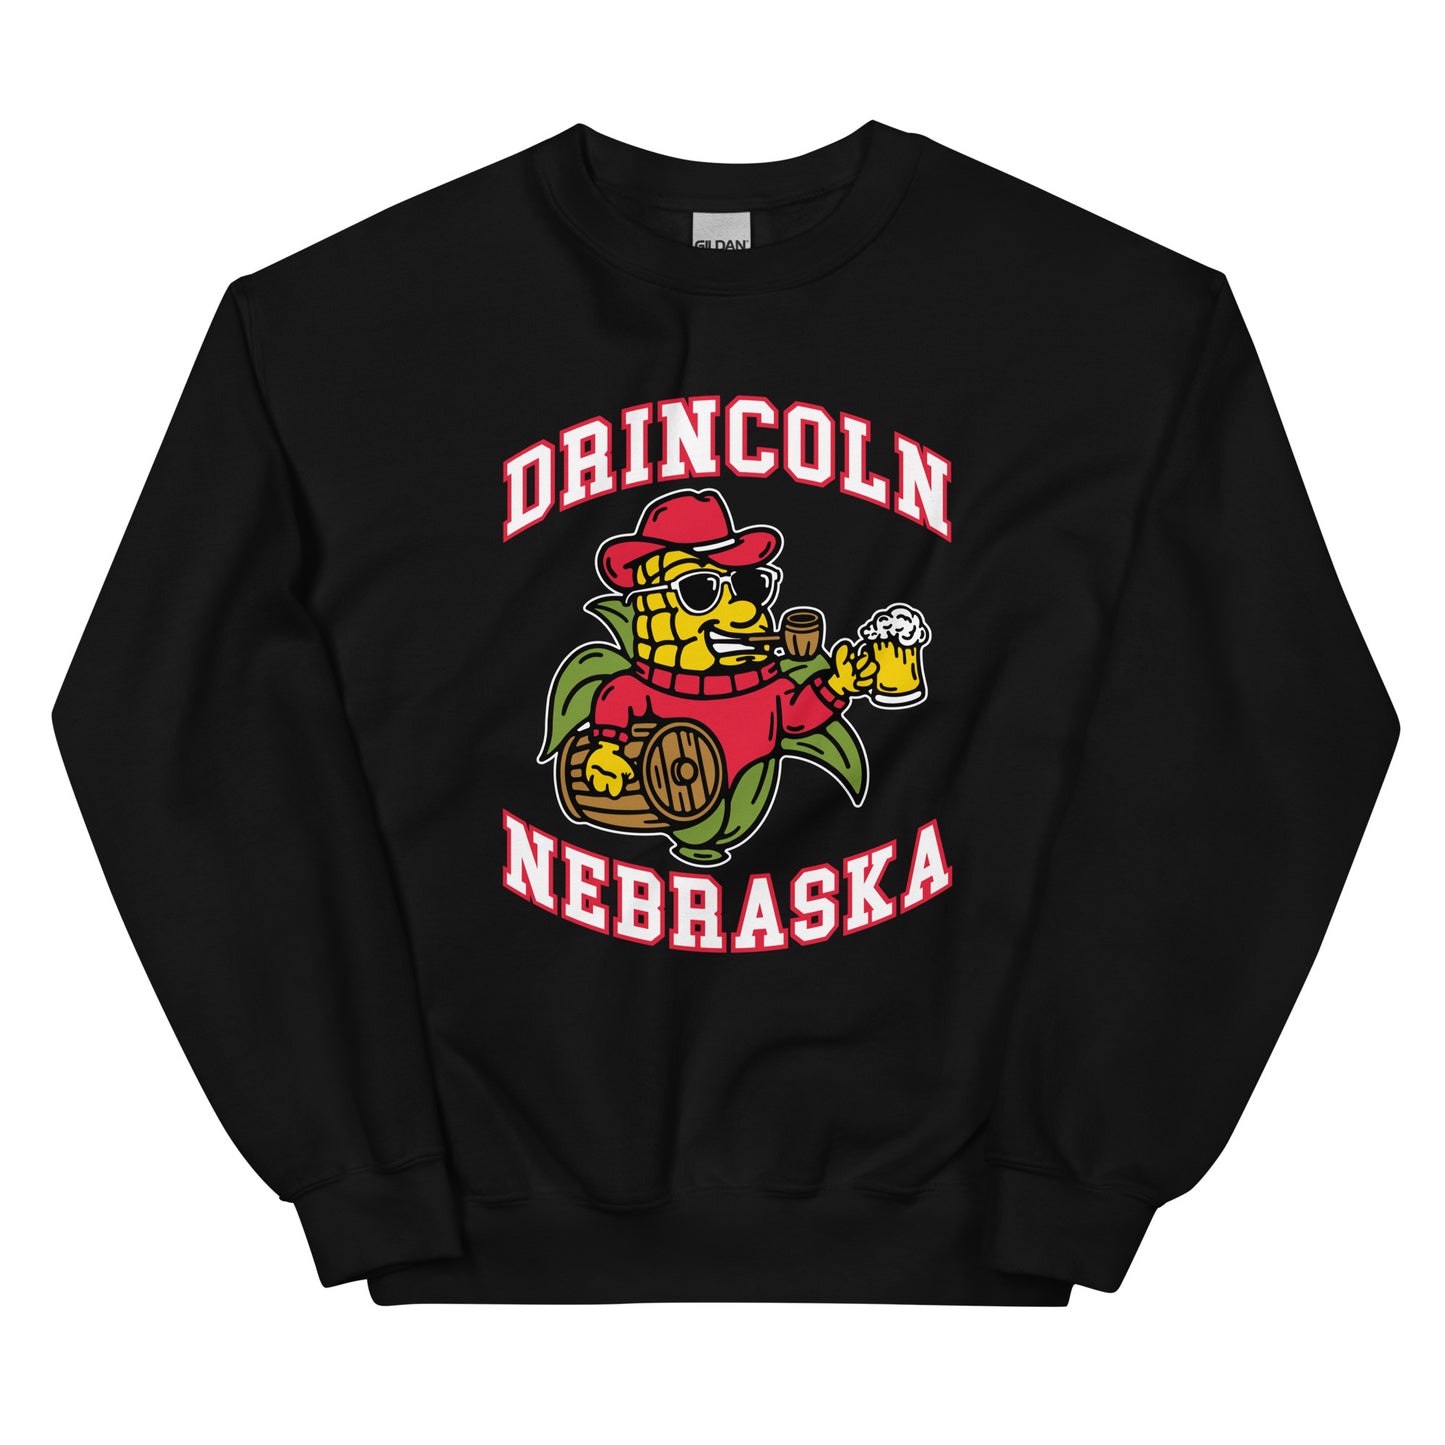 Drincoln Nebraska Sweatshirt